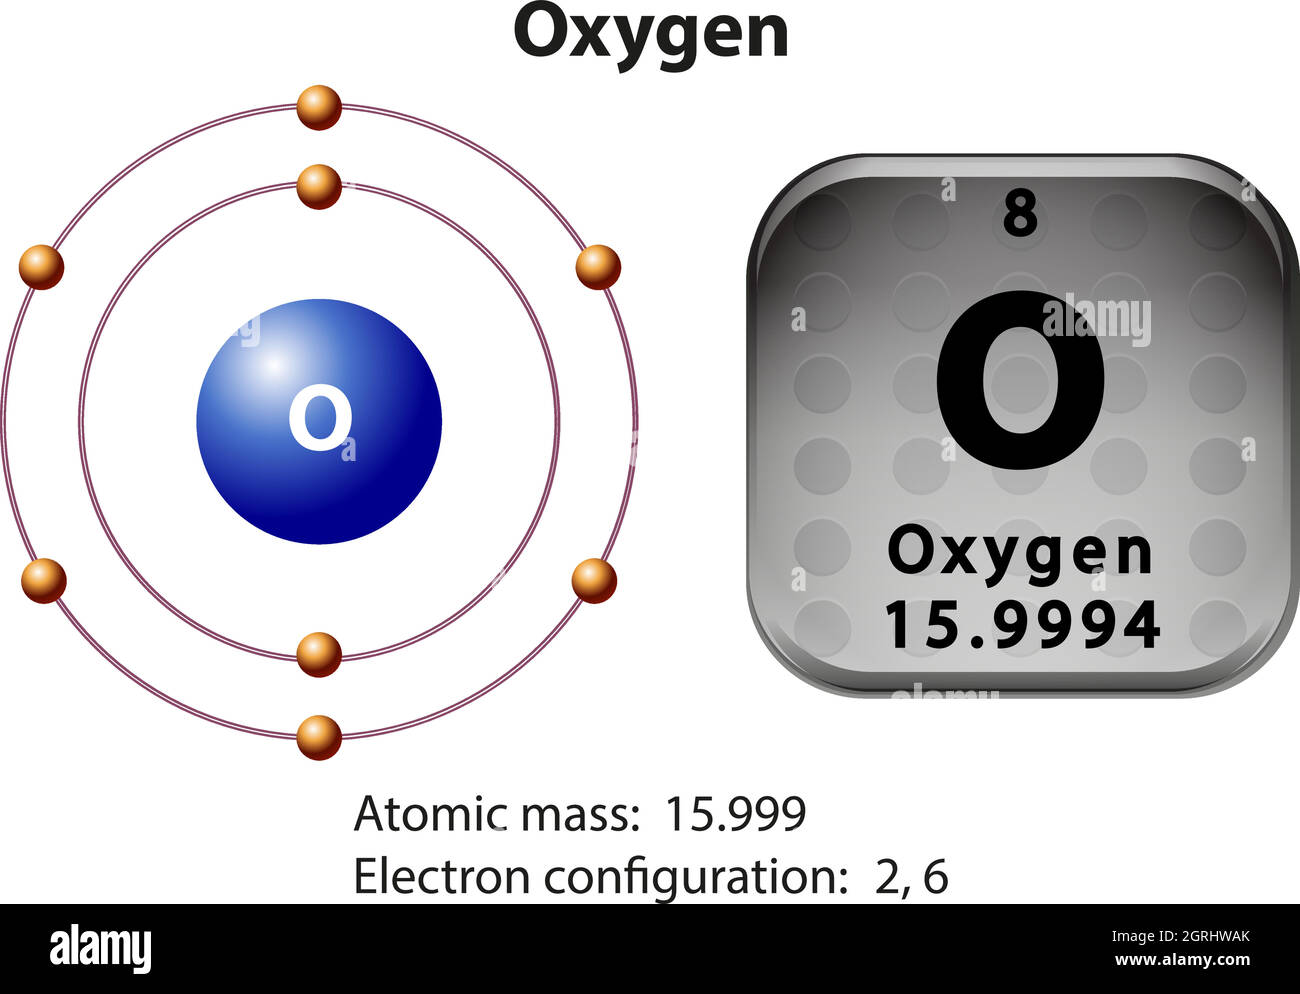 Oxigeno configuracion electronica fotografías e imágenes de alta resolución  - Alamy